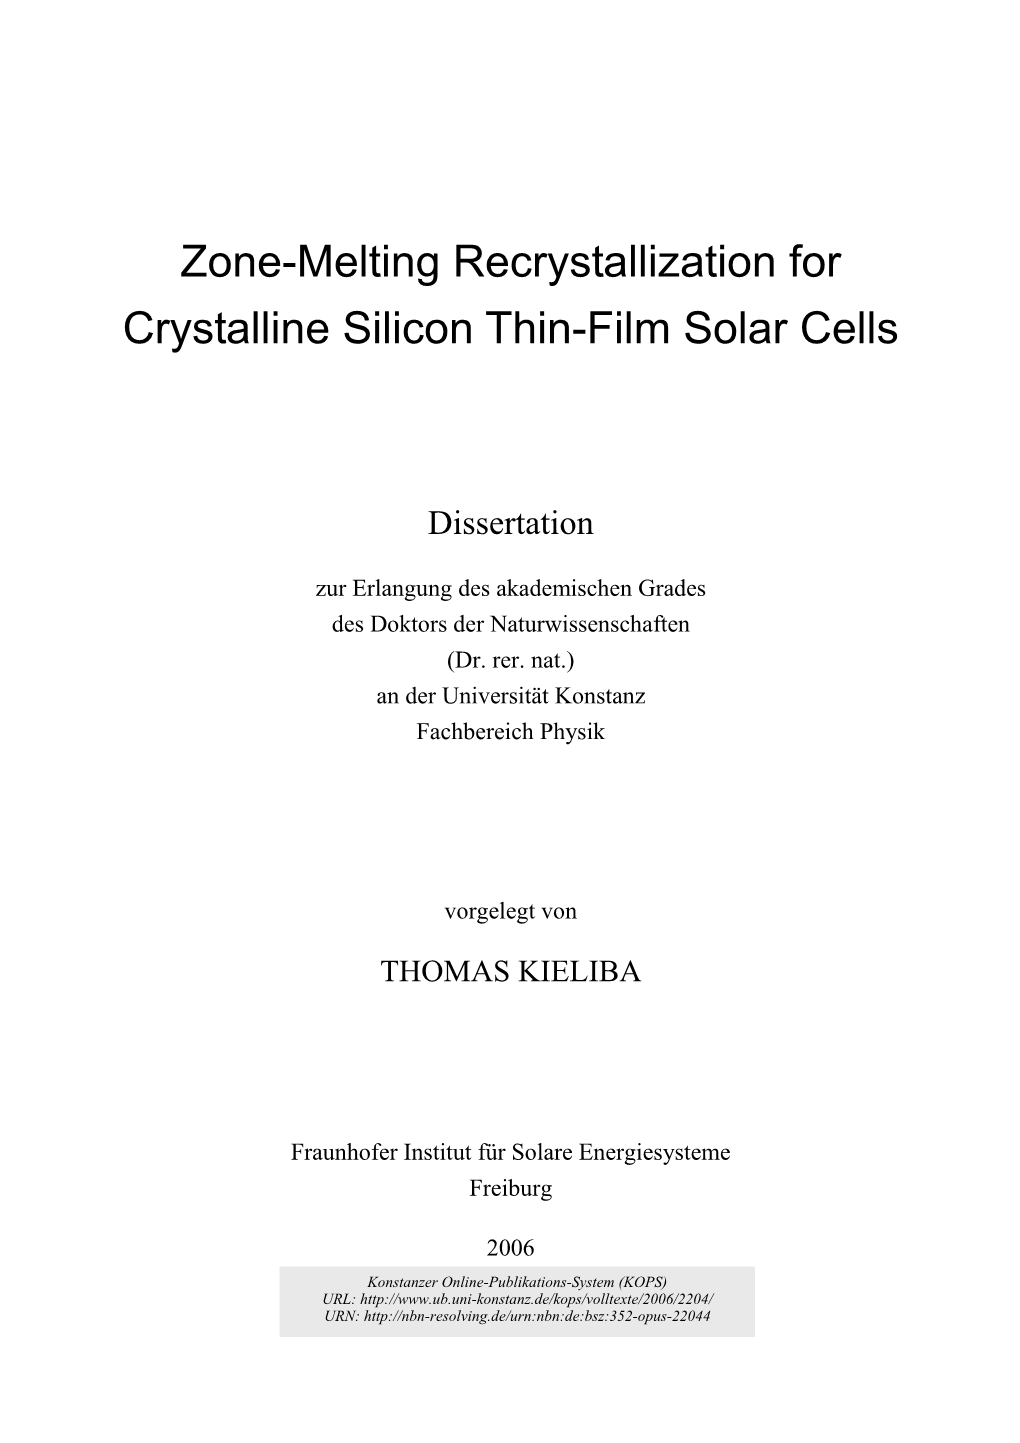 Zone-Melting Recrystallization for Crystalline Silicon Thin-Film Solar Cells